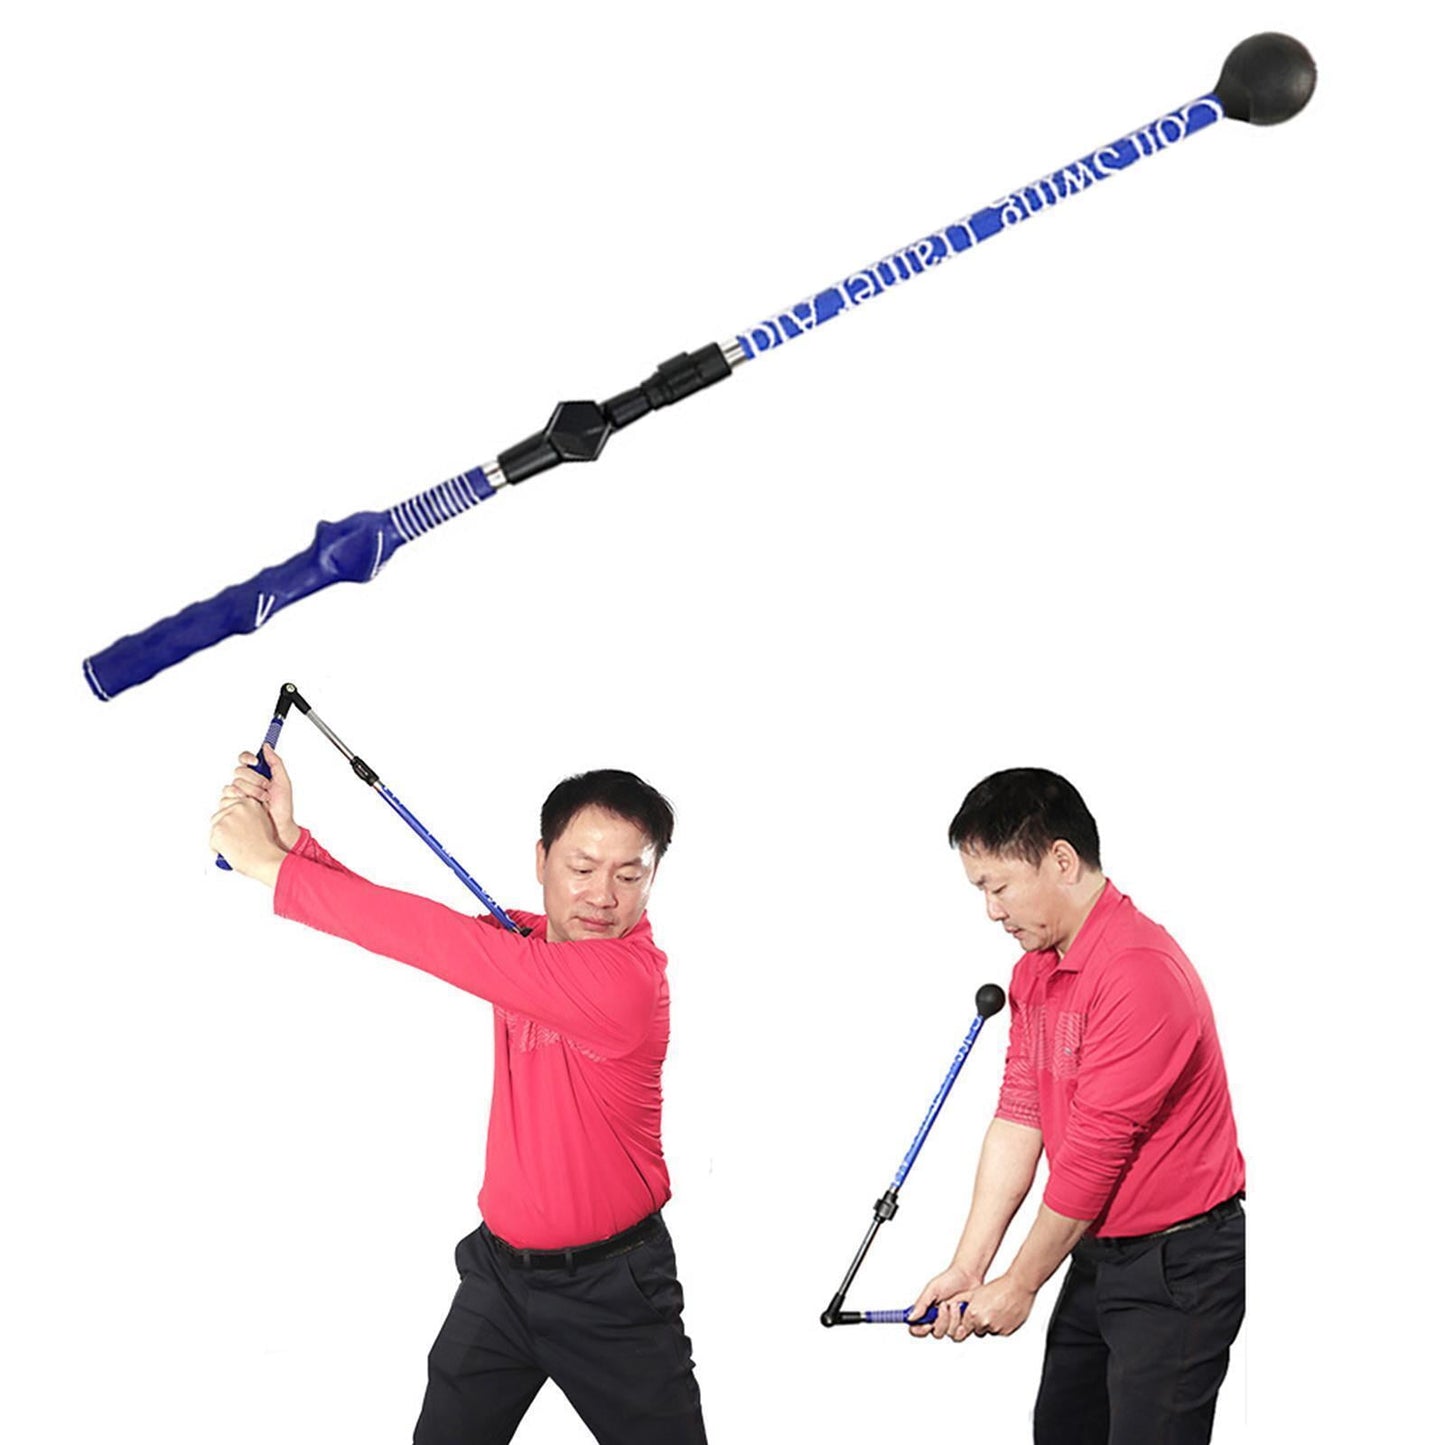 Aid Swing - Golf Swing Trainer